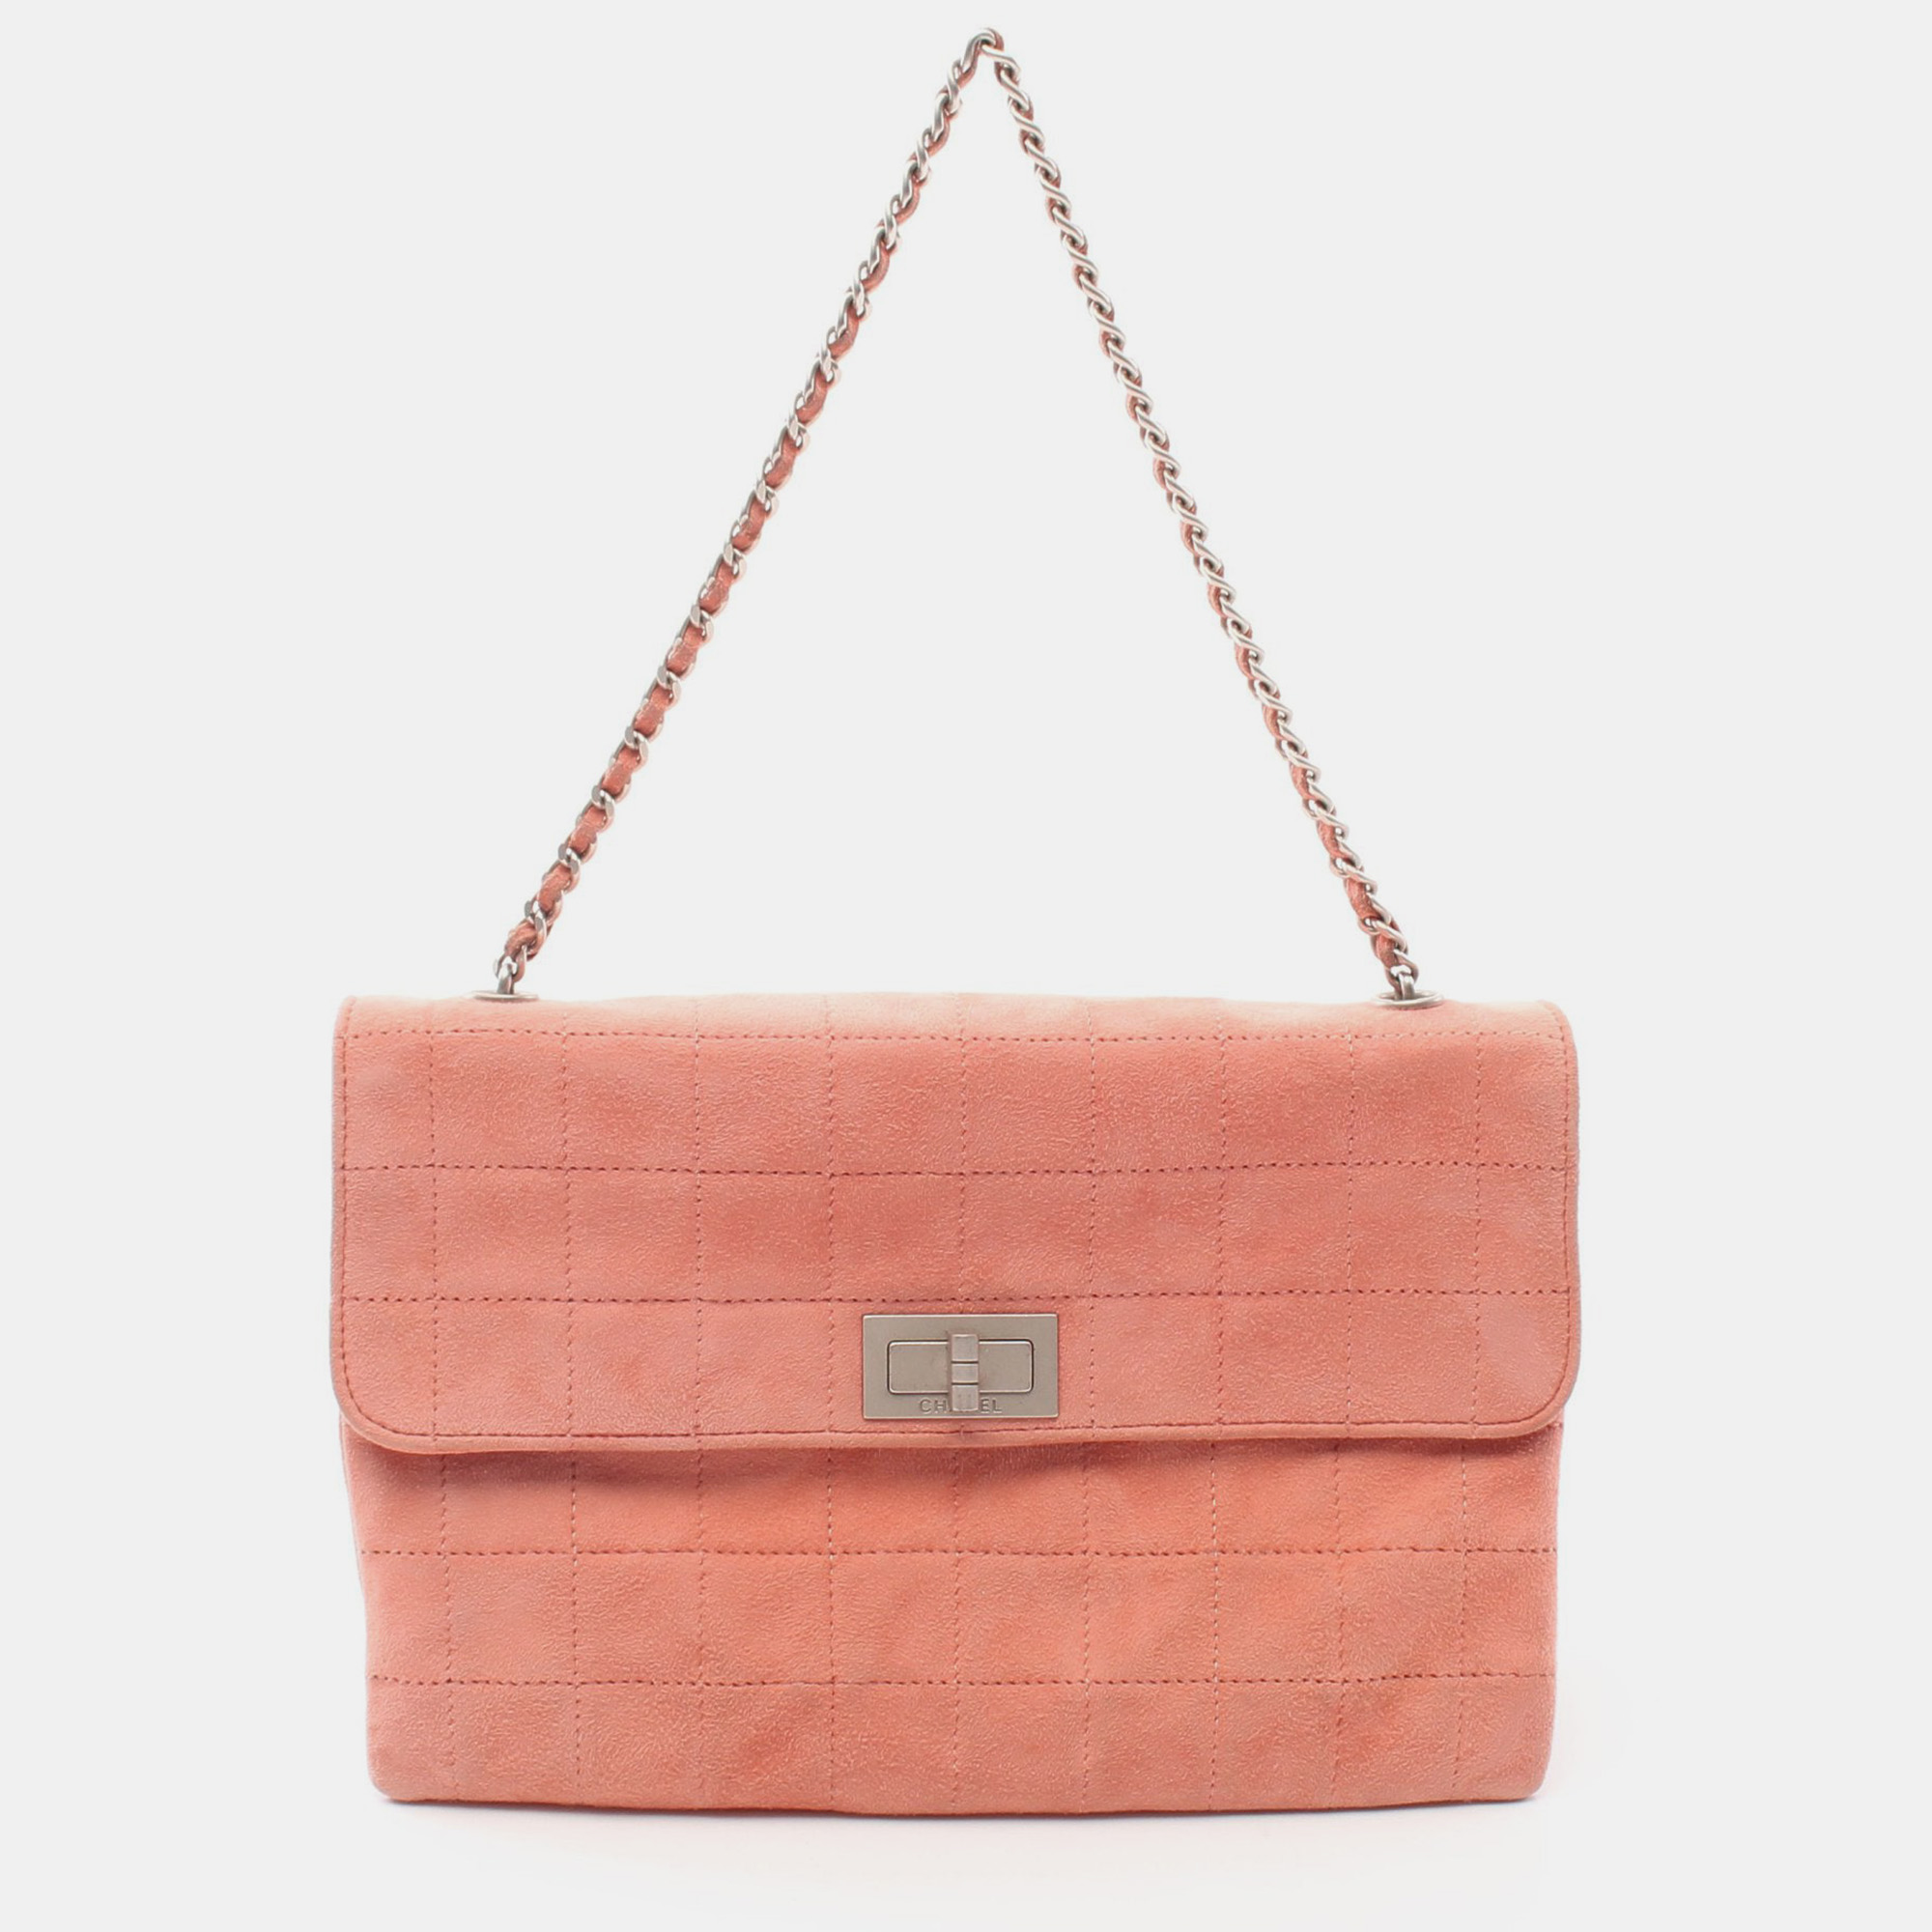 Chanel 2.55 chocolate bar chain handbag suede coral pink silver hardware